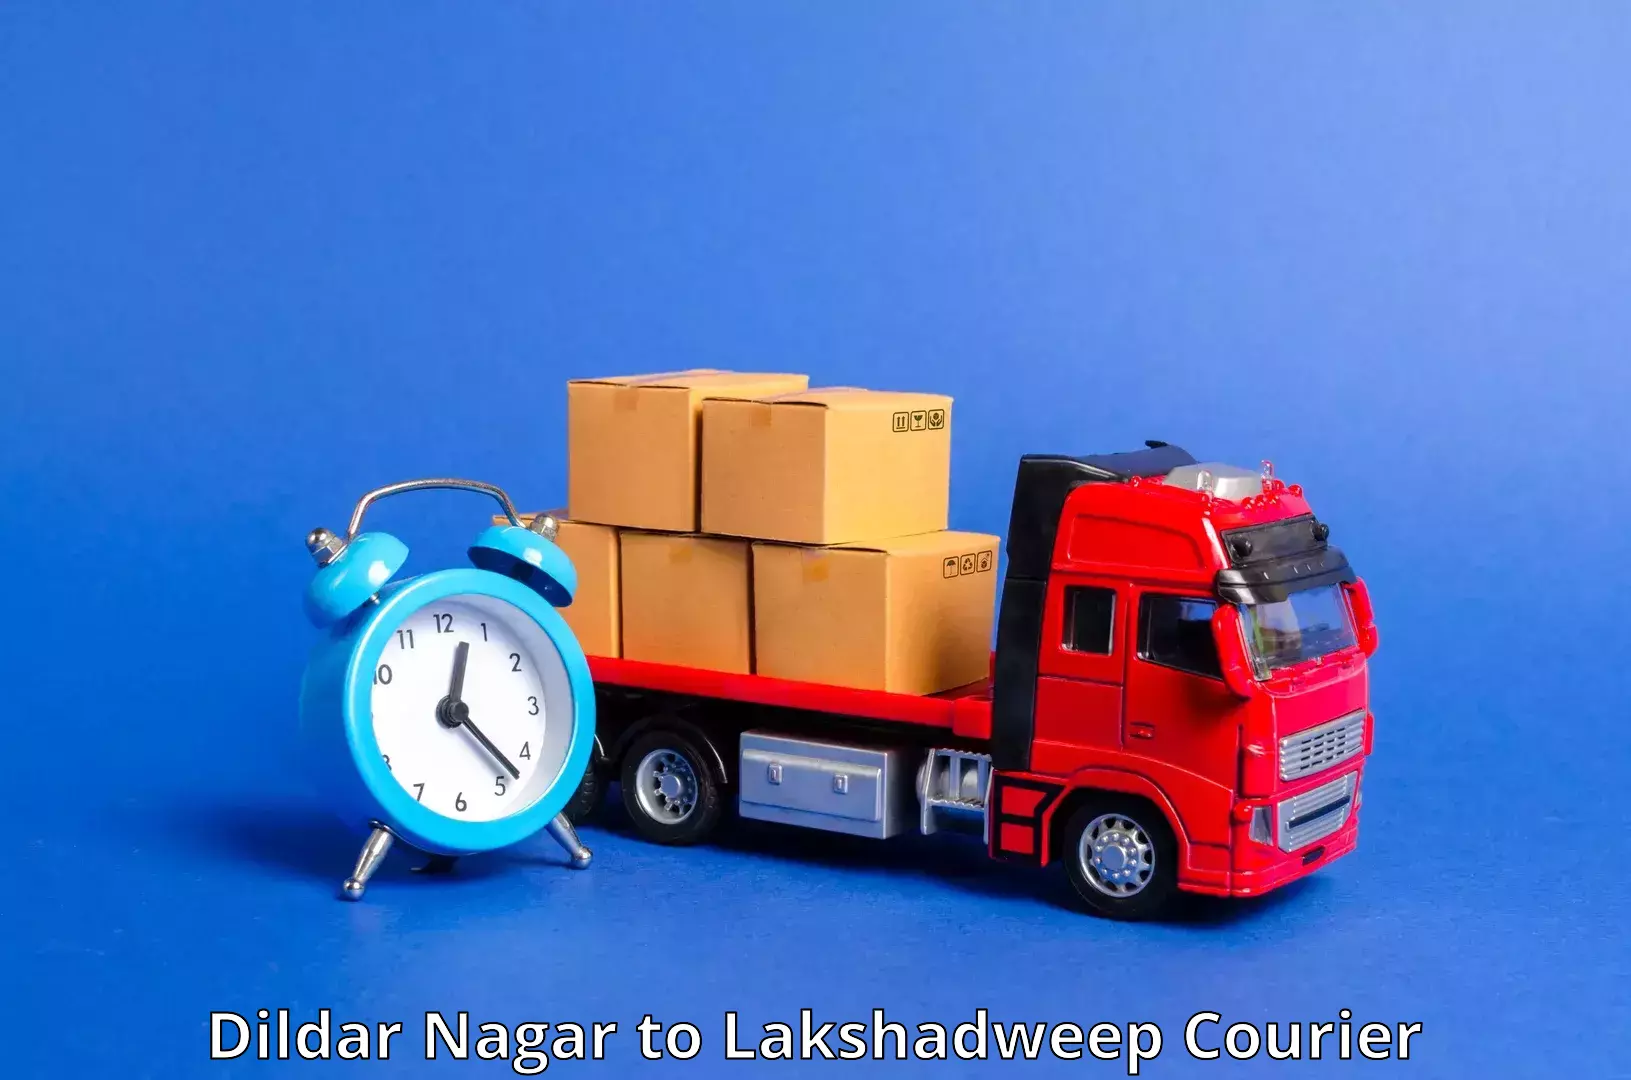 Nationwide courier service Dildar Nagar to Lakshadweep